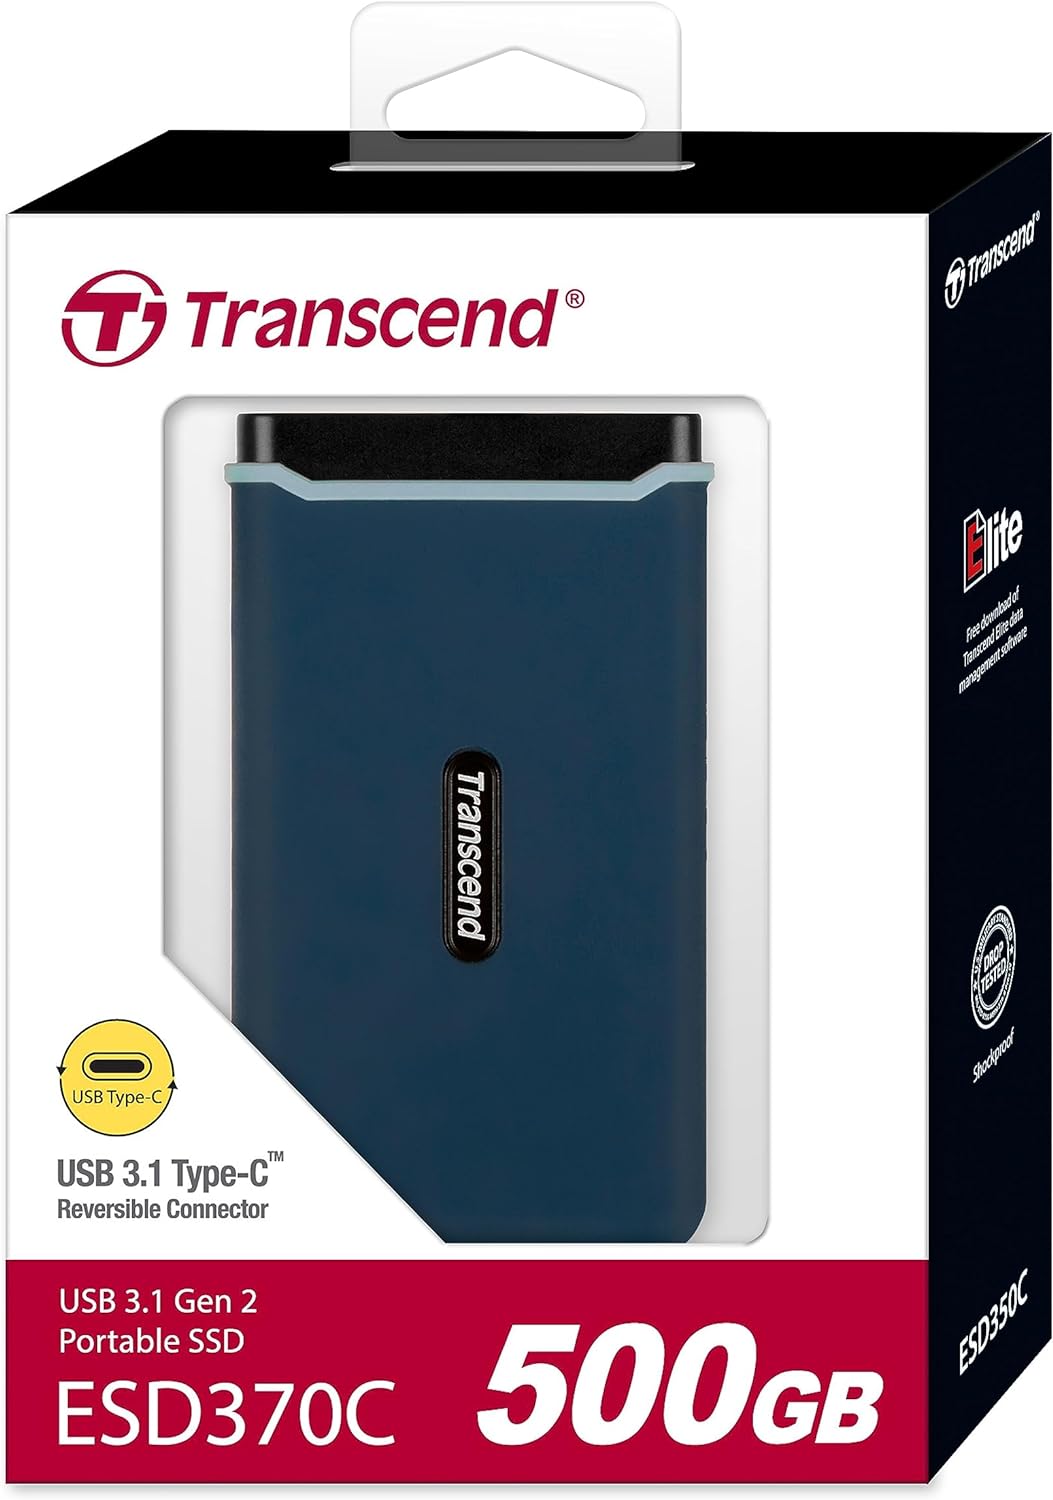 Transcend 500GB USB 3.1 Gen 2 USB Type-C ESD370C Portable SSD External Hard Drive (Brand New)